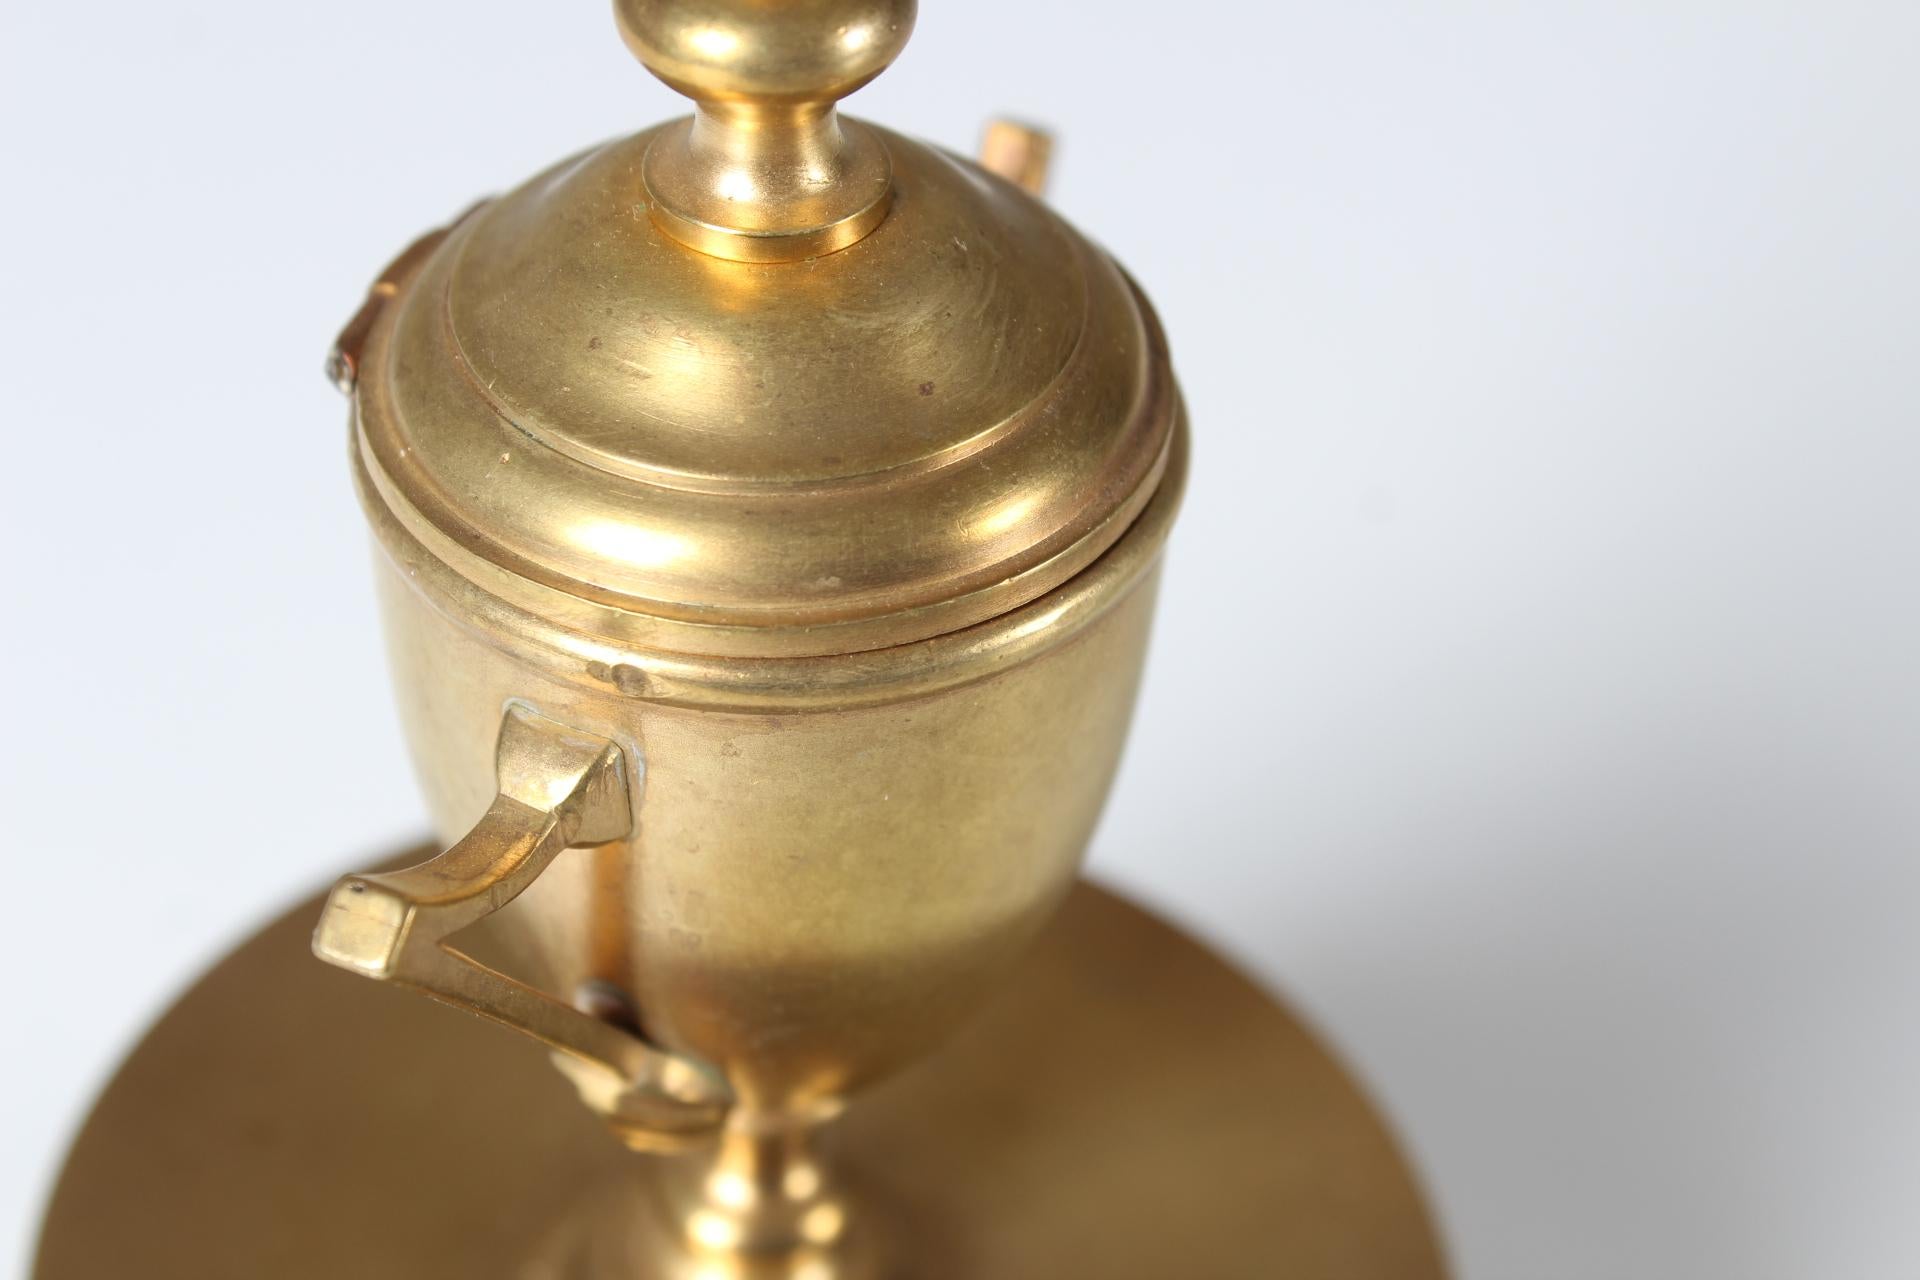 French Antique Inkwell, Gilded Bronze, Antique Desk Utensil, Vase-Shaped For Sale